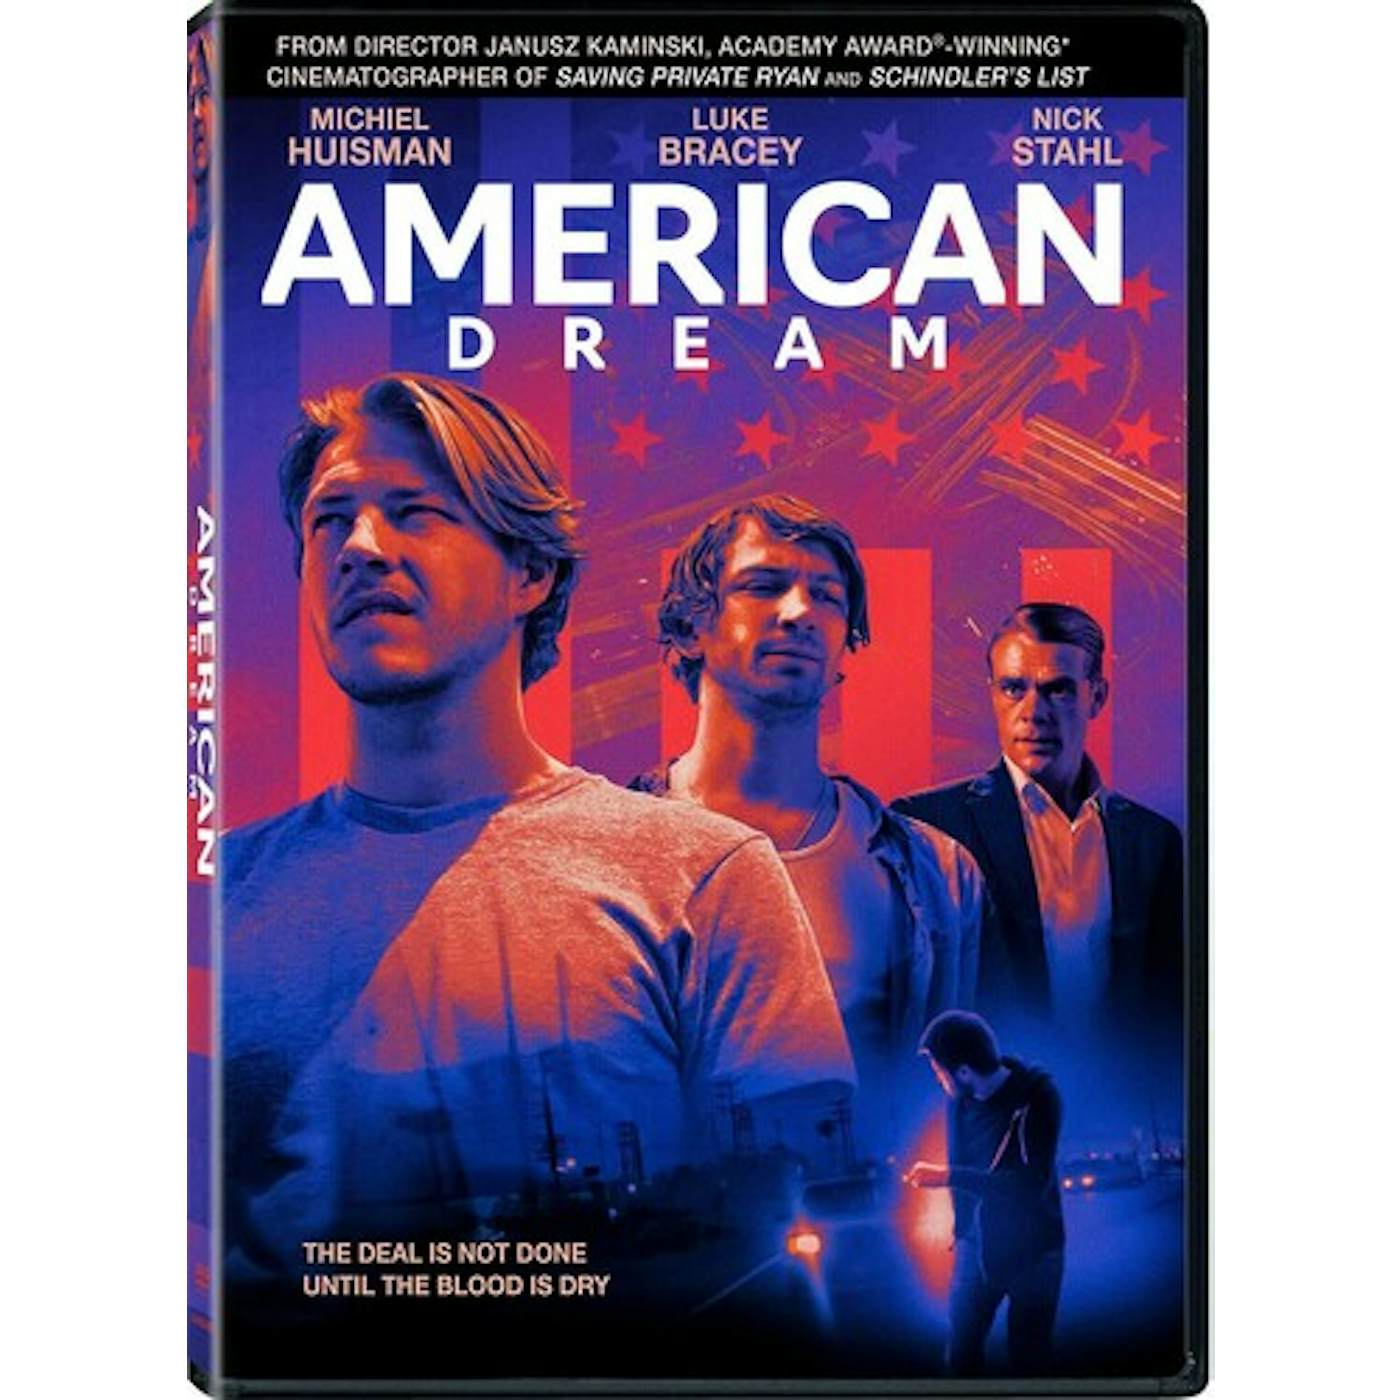 AMERICAN DREAM DVD